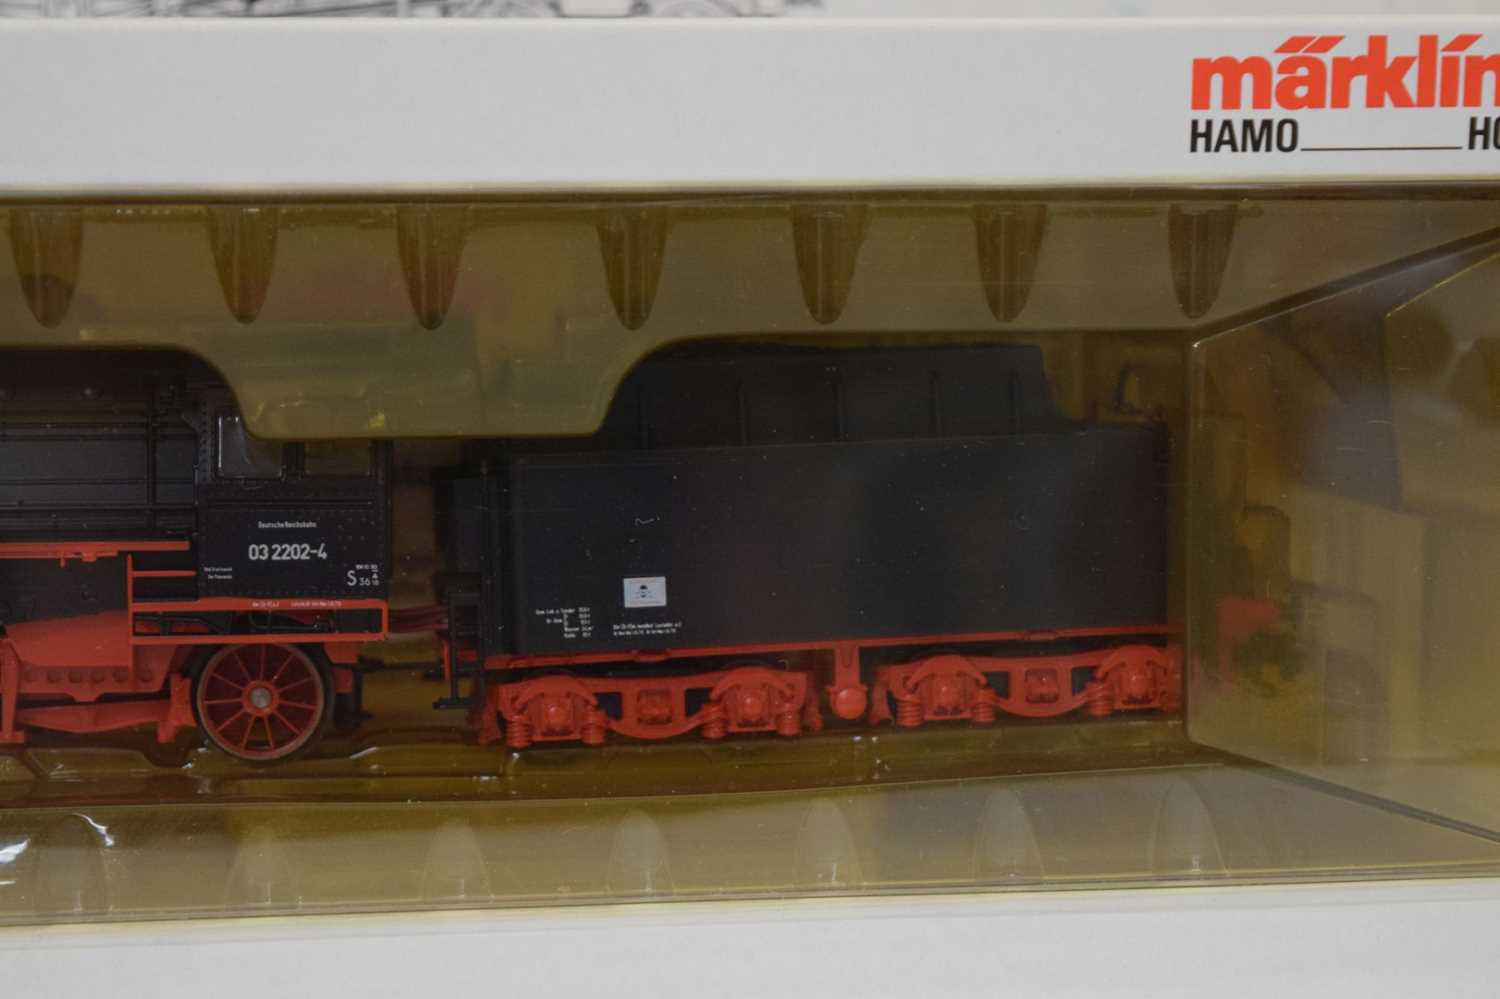 Märklin - Boxed H0/00 gauge BR 03 railway trainset locomotive and tender - Image 4 of 7